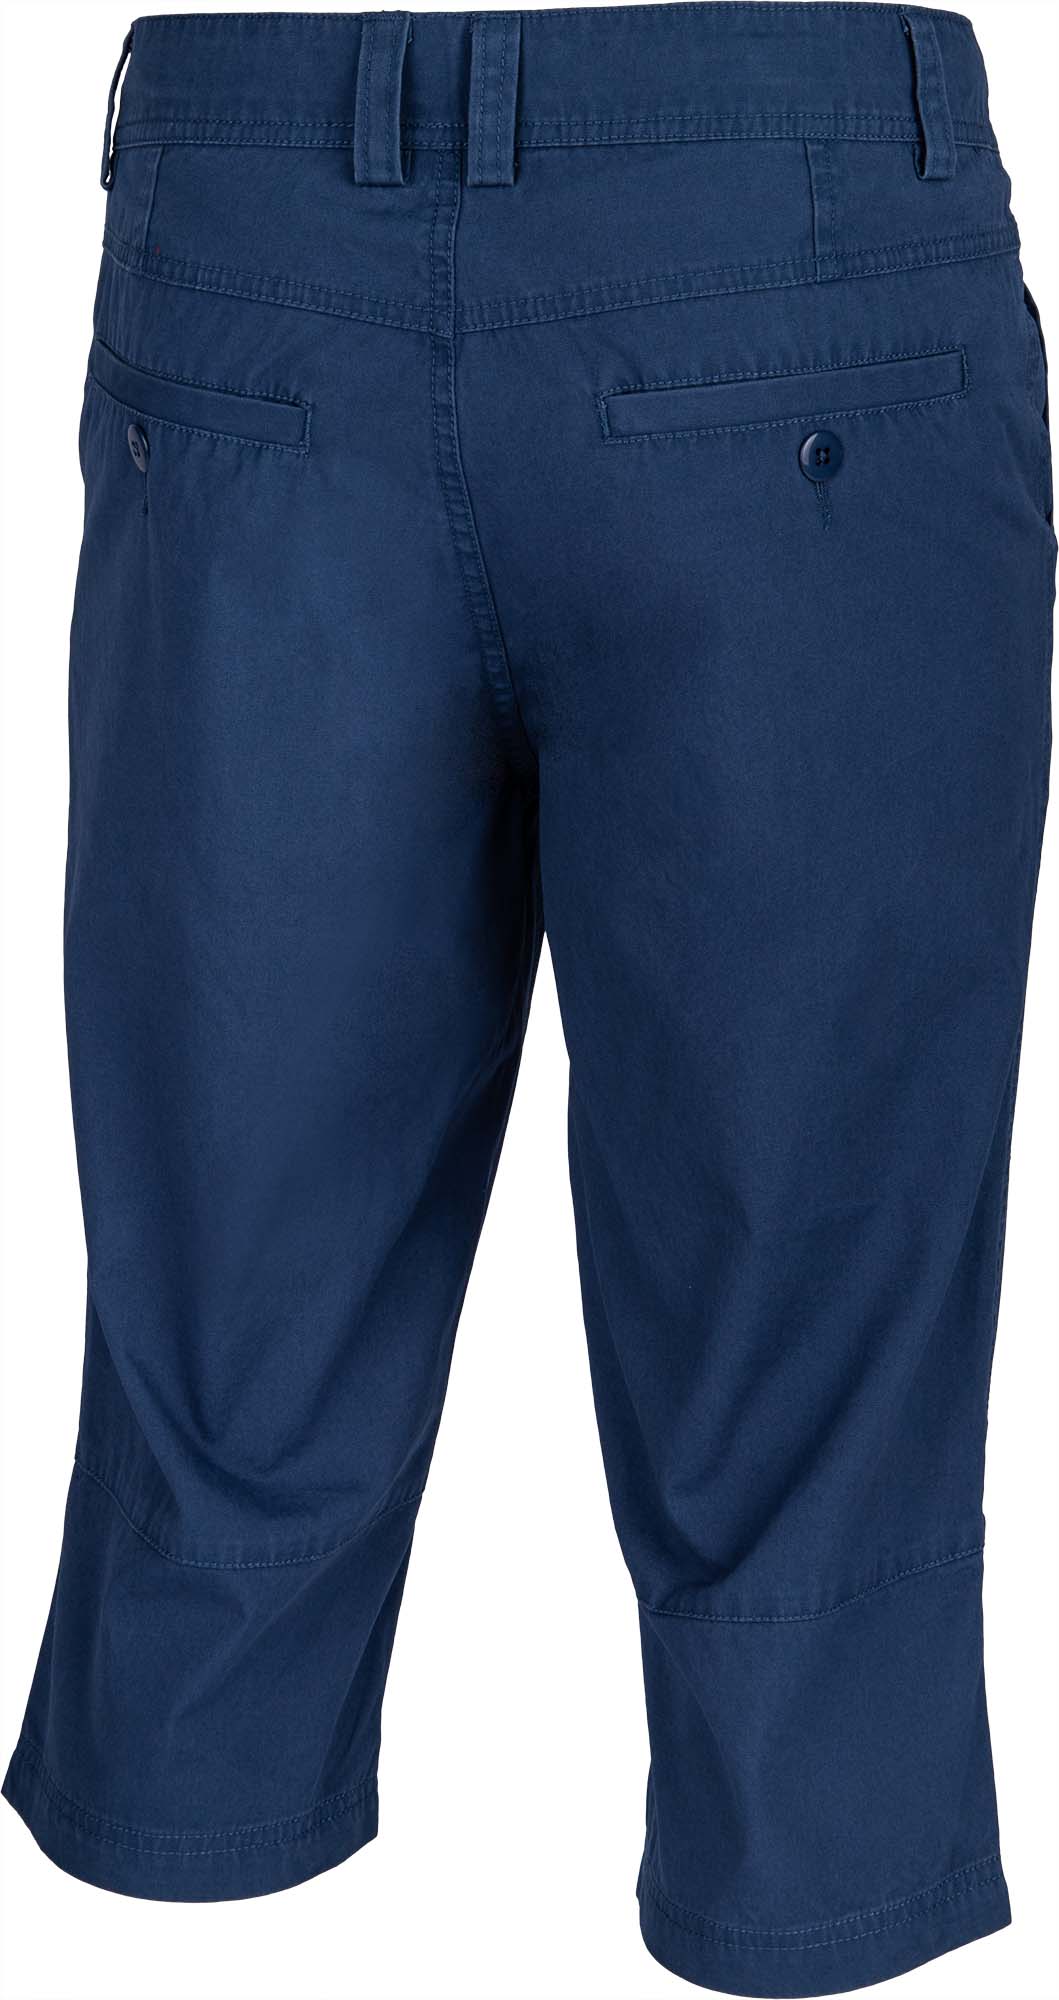 Men's 3/4 length pants